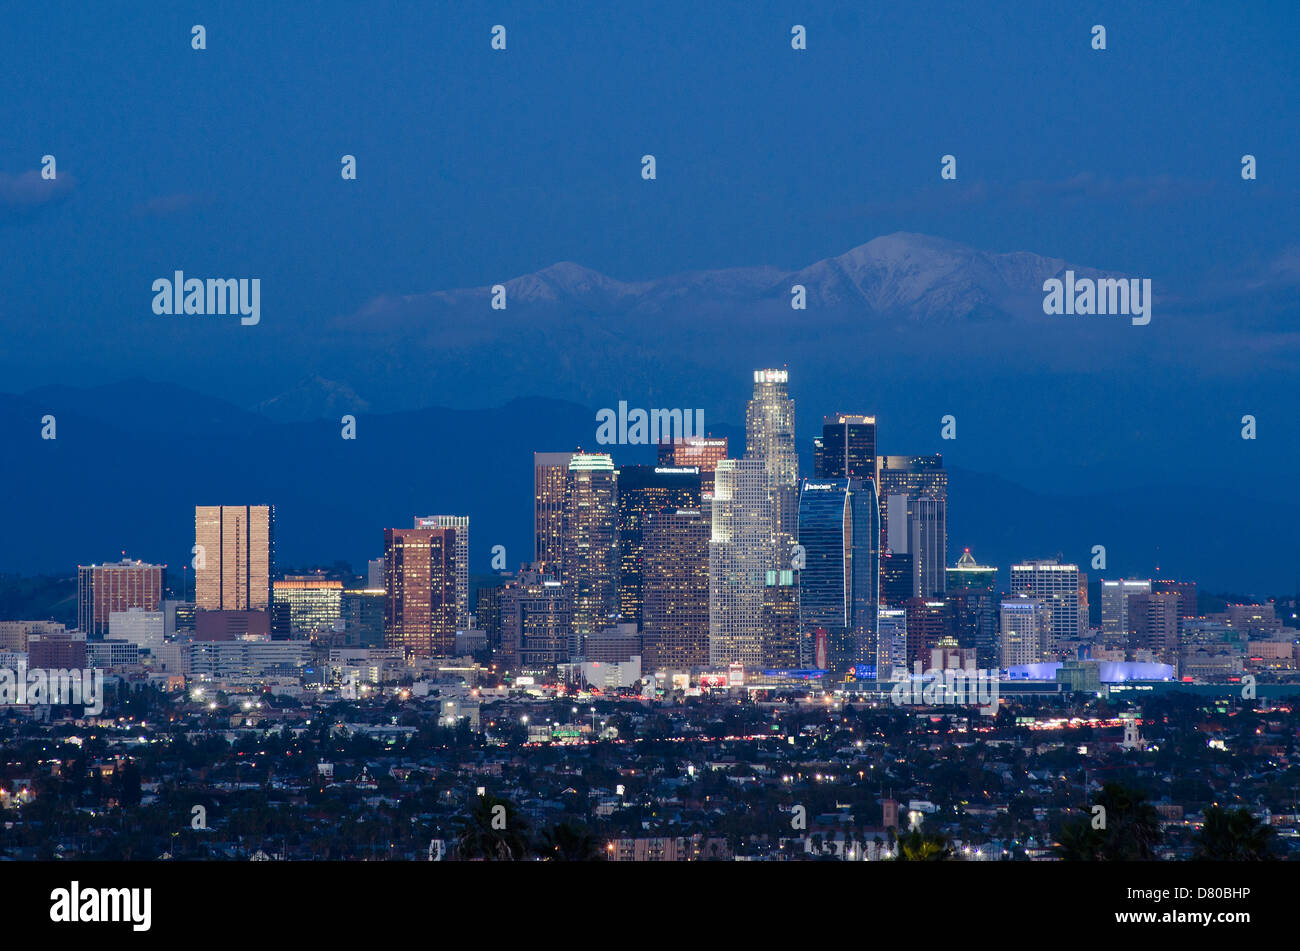 City skyline lit up at night, Los Angeles, California, United States Stock Photo